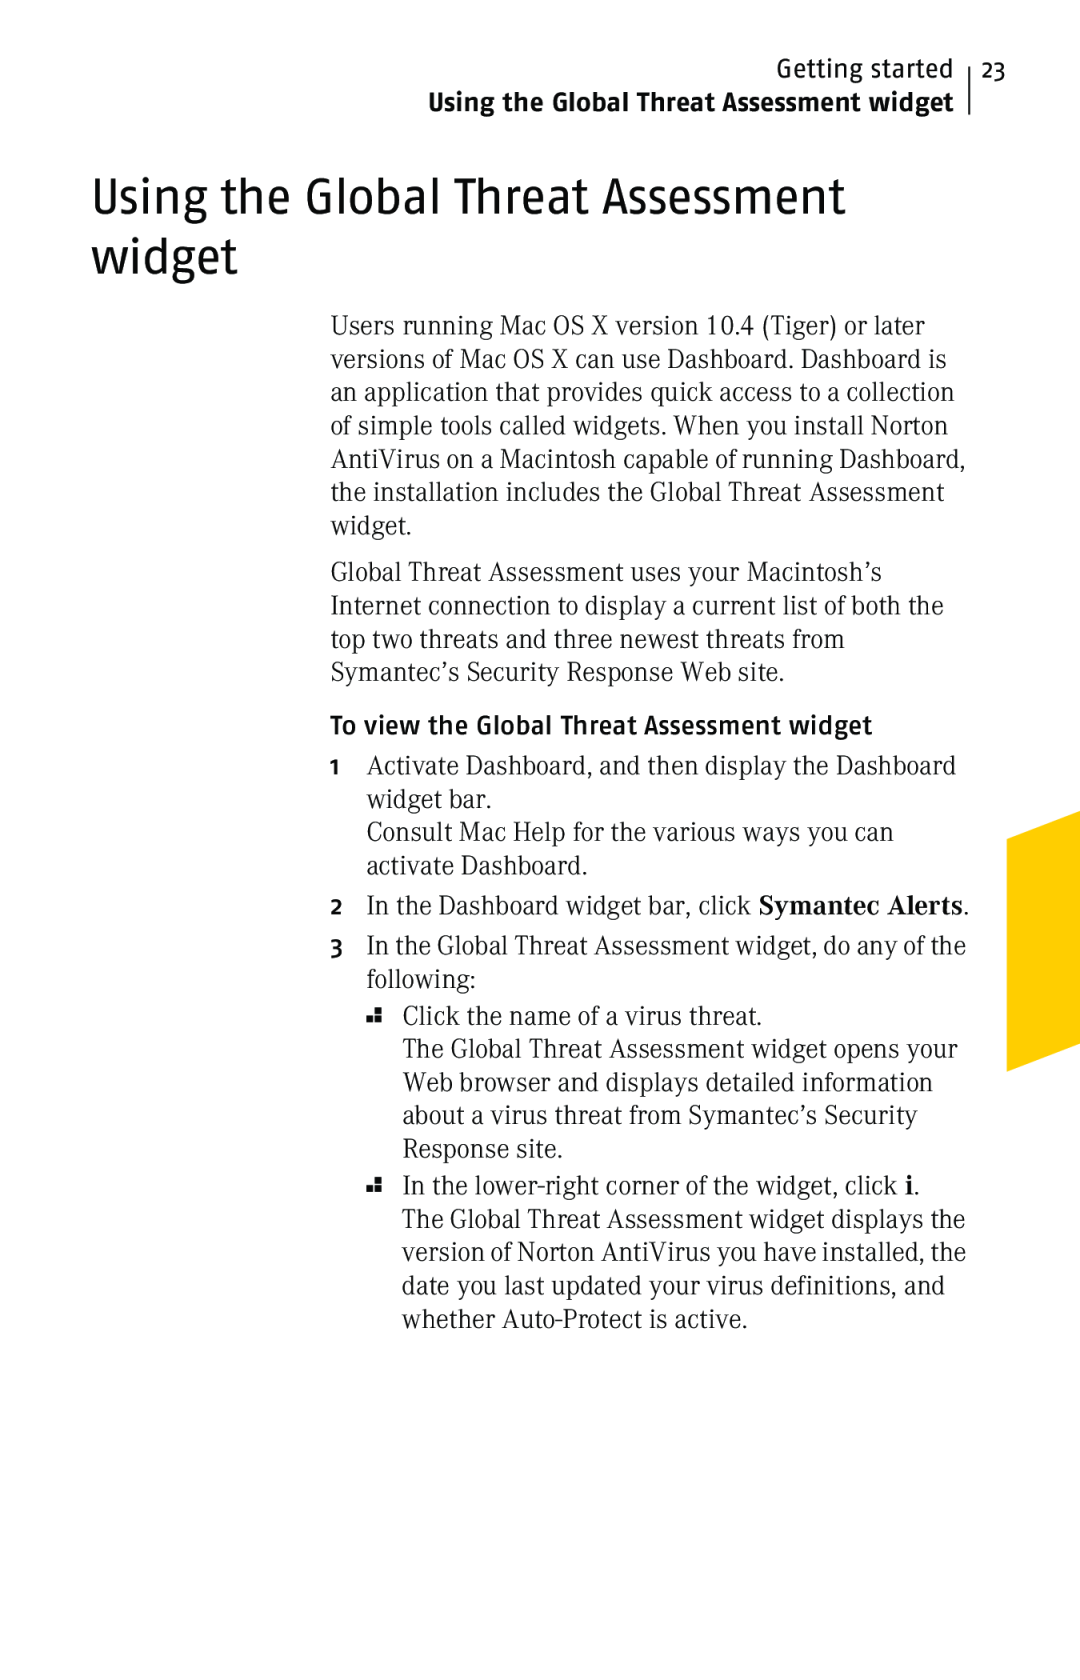 Symantec 10 manual Using the Global Threat Assessment widget 